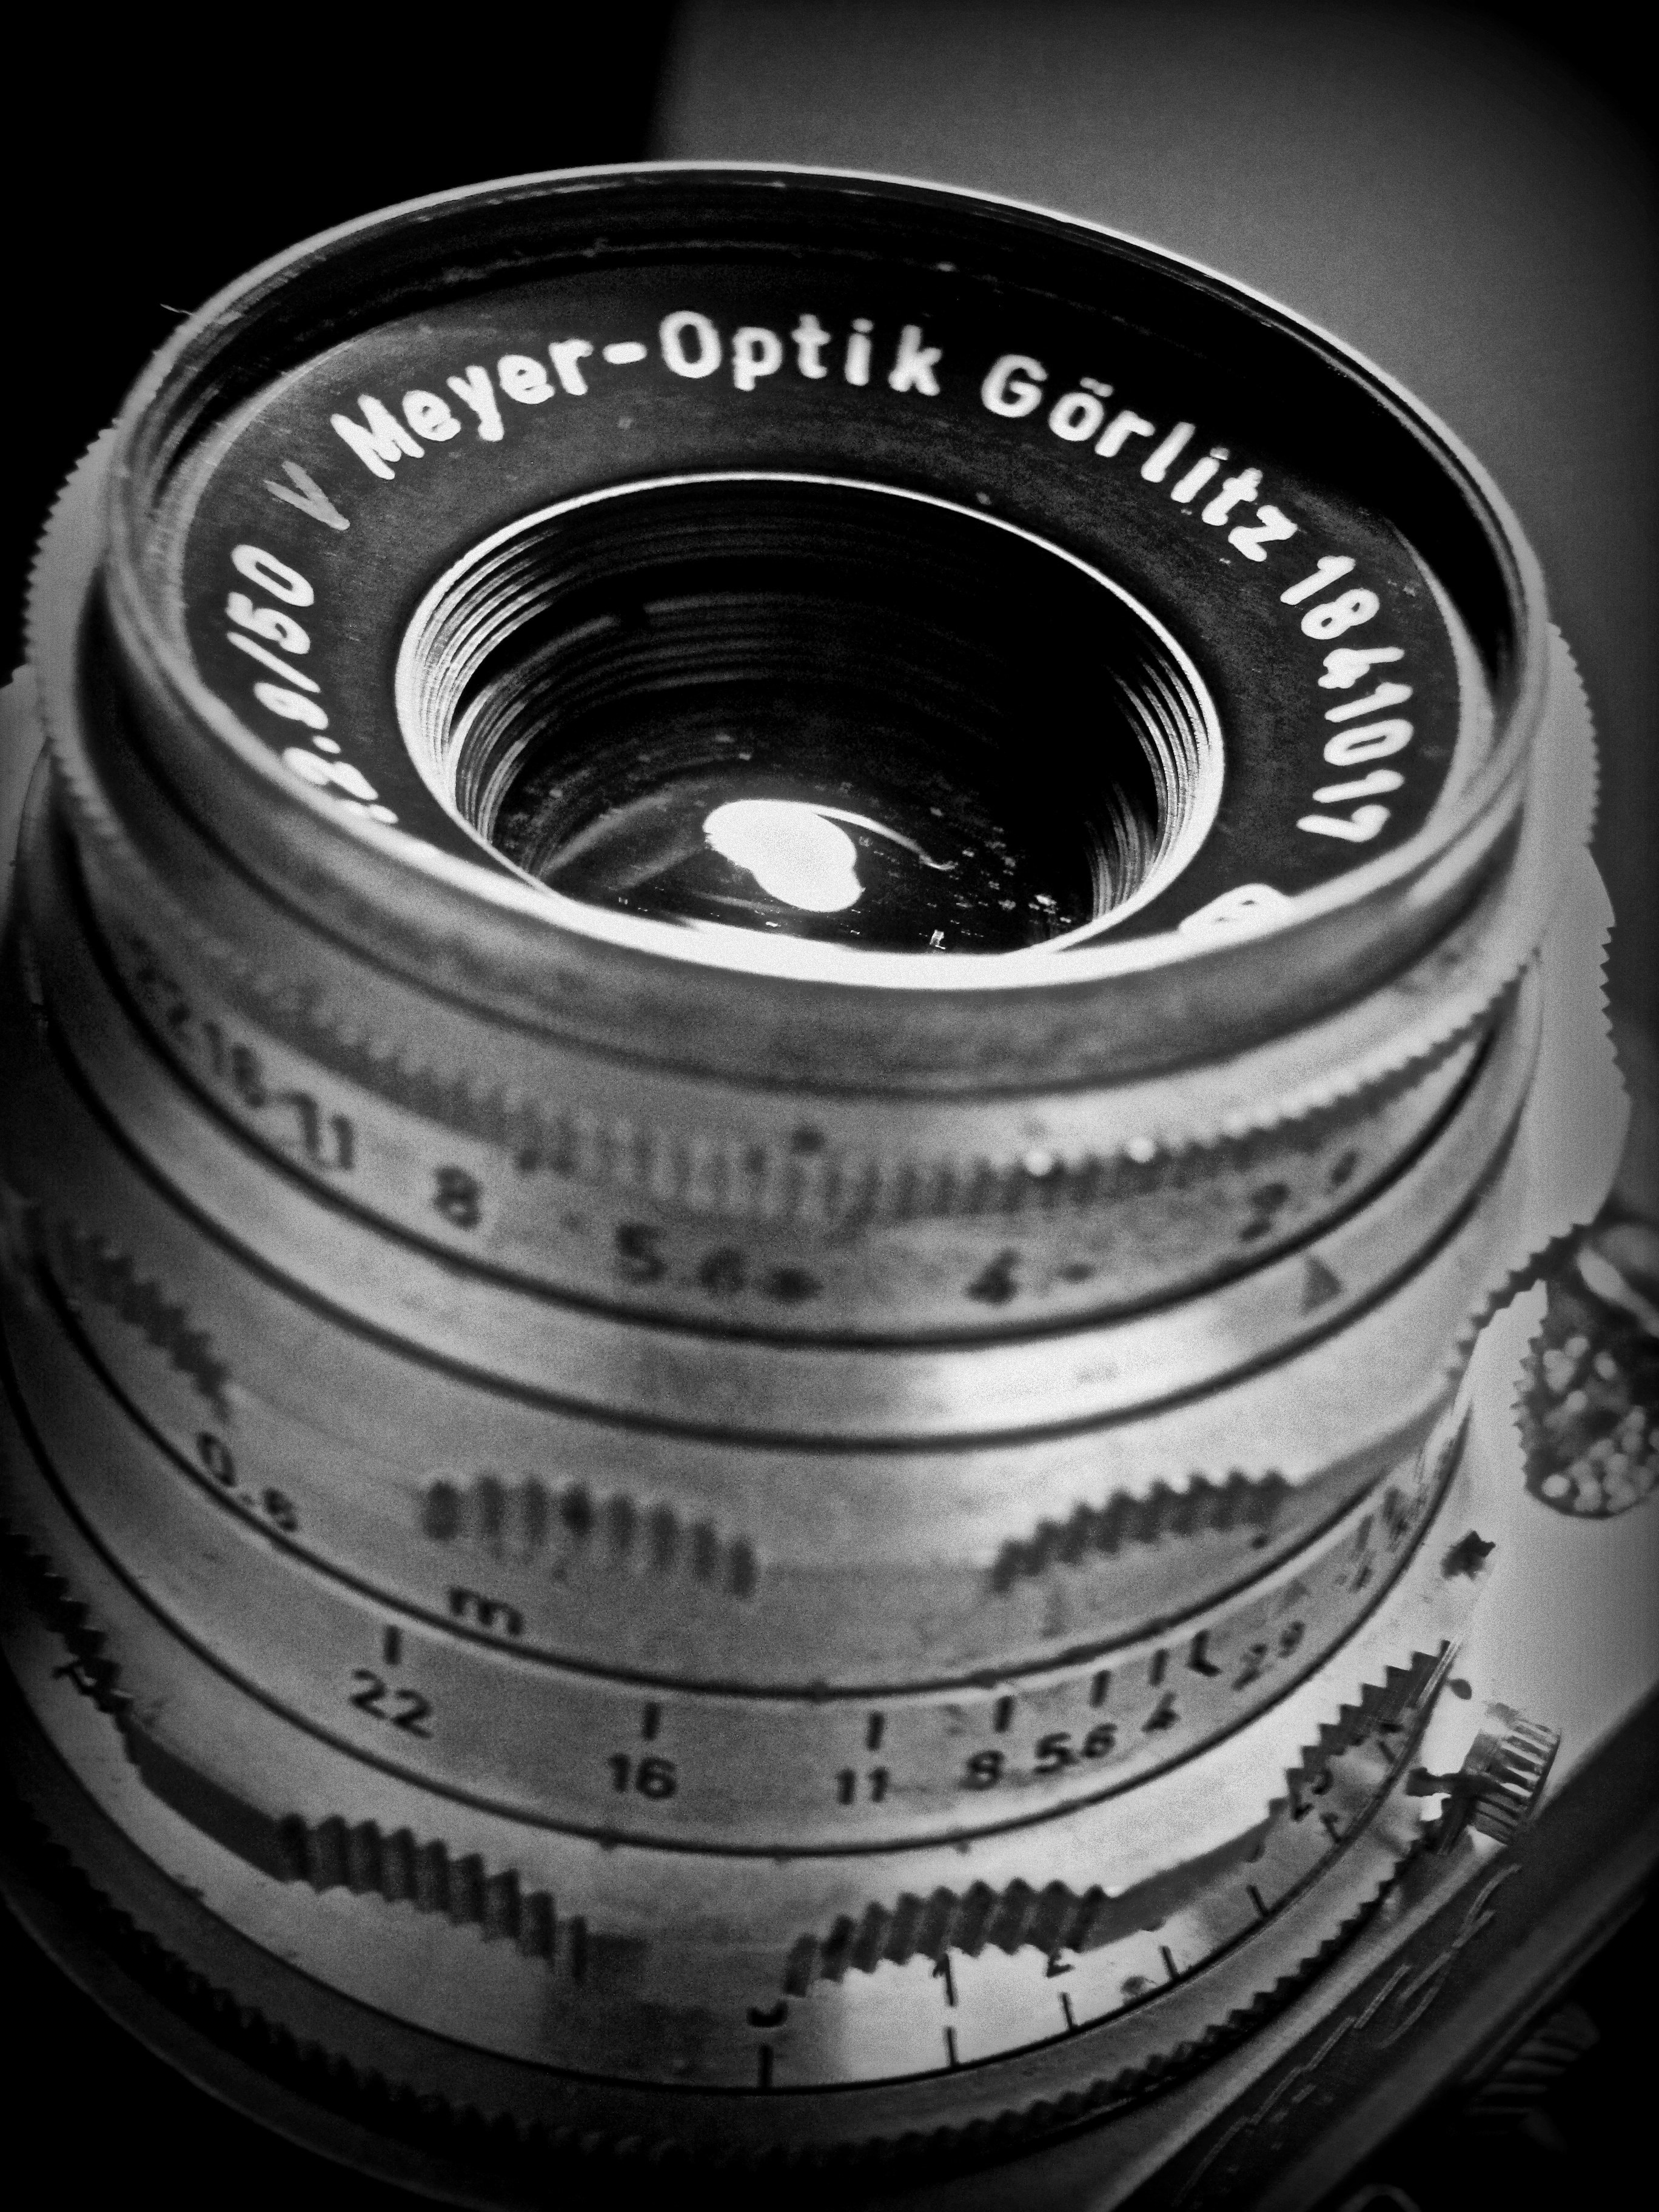 grey and black round camera lens